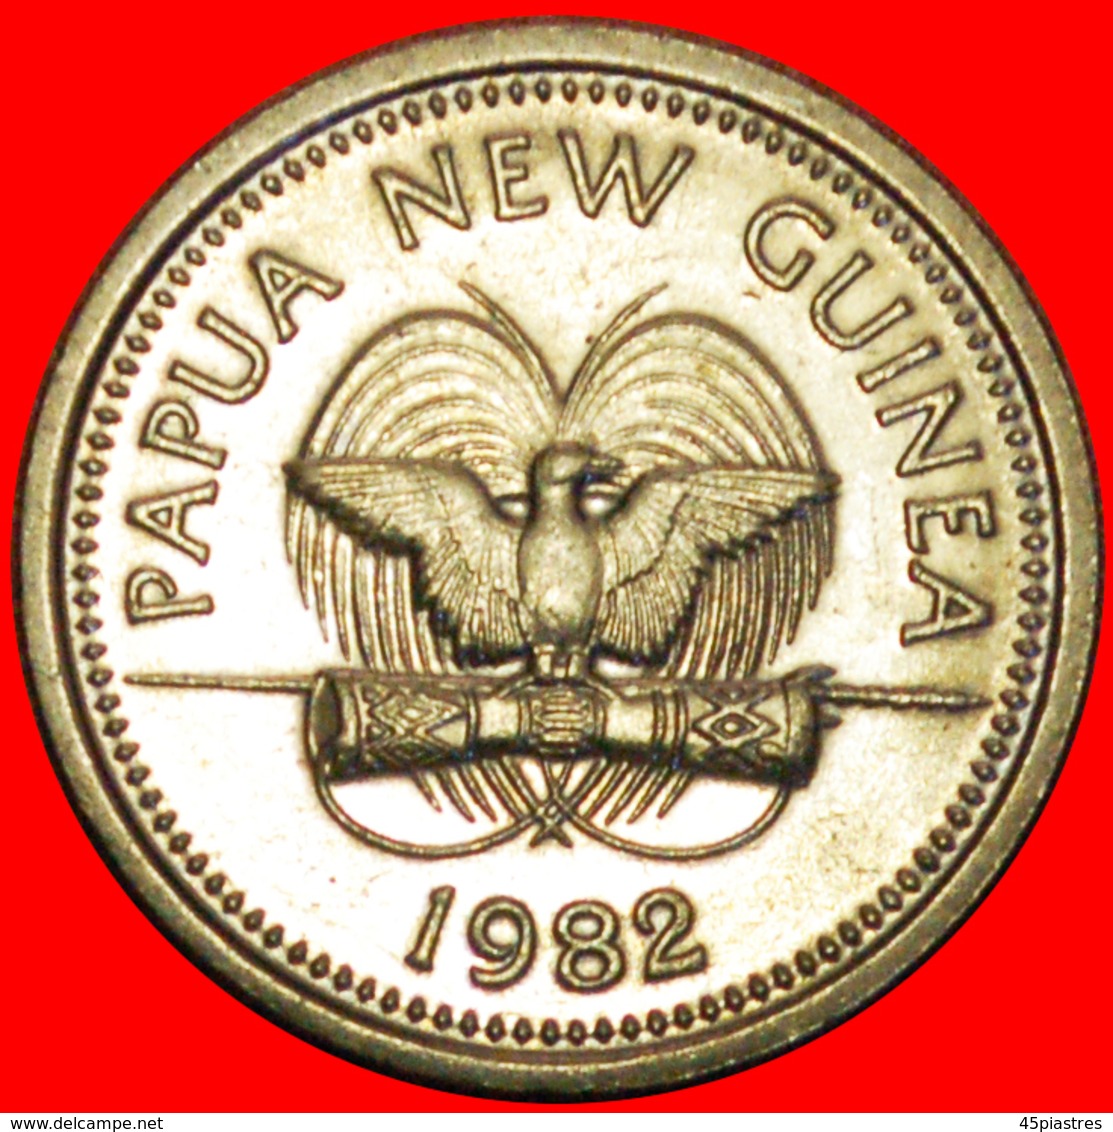 + GREAT BRITAIN TURTLE: PAPUA NEW GUINEA ★ 5 TOEA 1982 MINT LUSTER! LOW START ★ NO RESERVE! - Papouasie-Nouvelle-Guinée